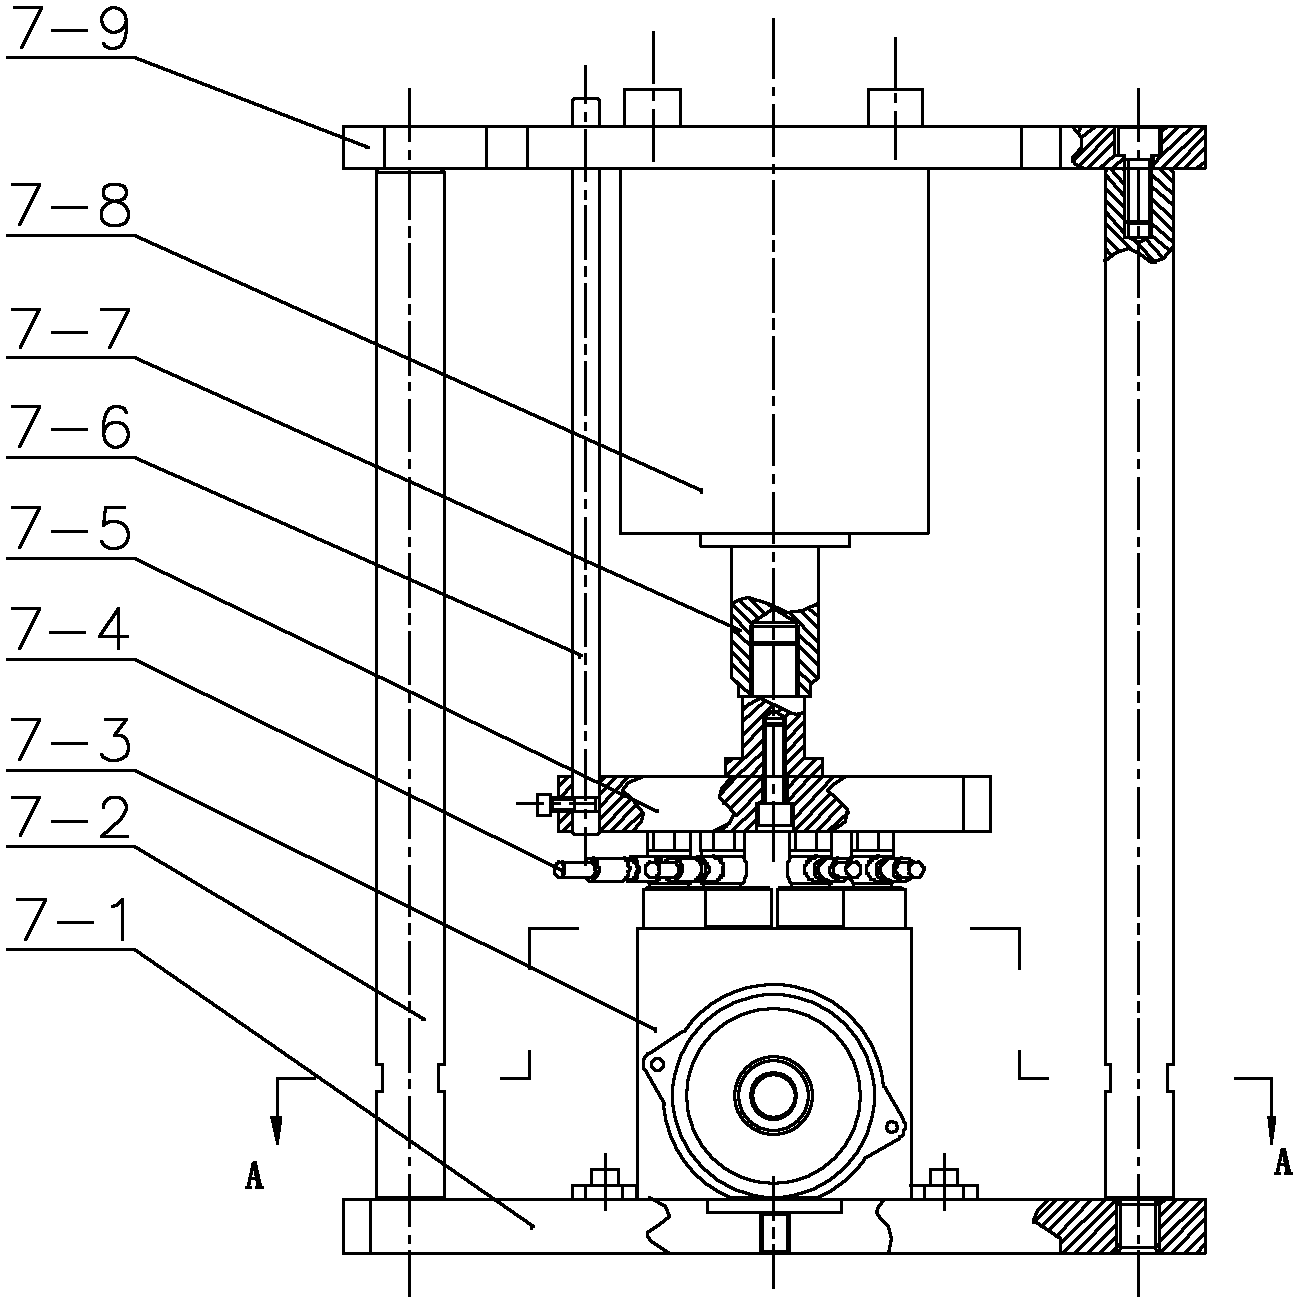 Plunger pump performance test board used for ABS (Anti Lock Brake System) pressure regulator